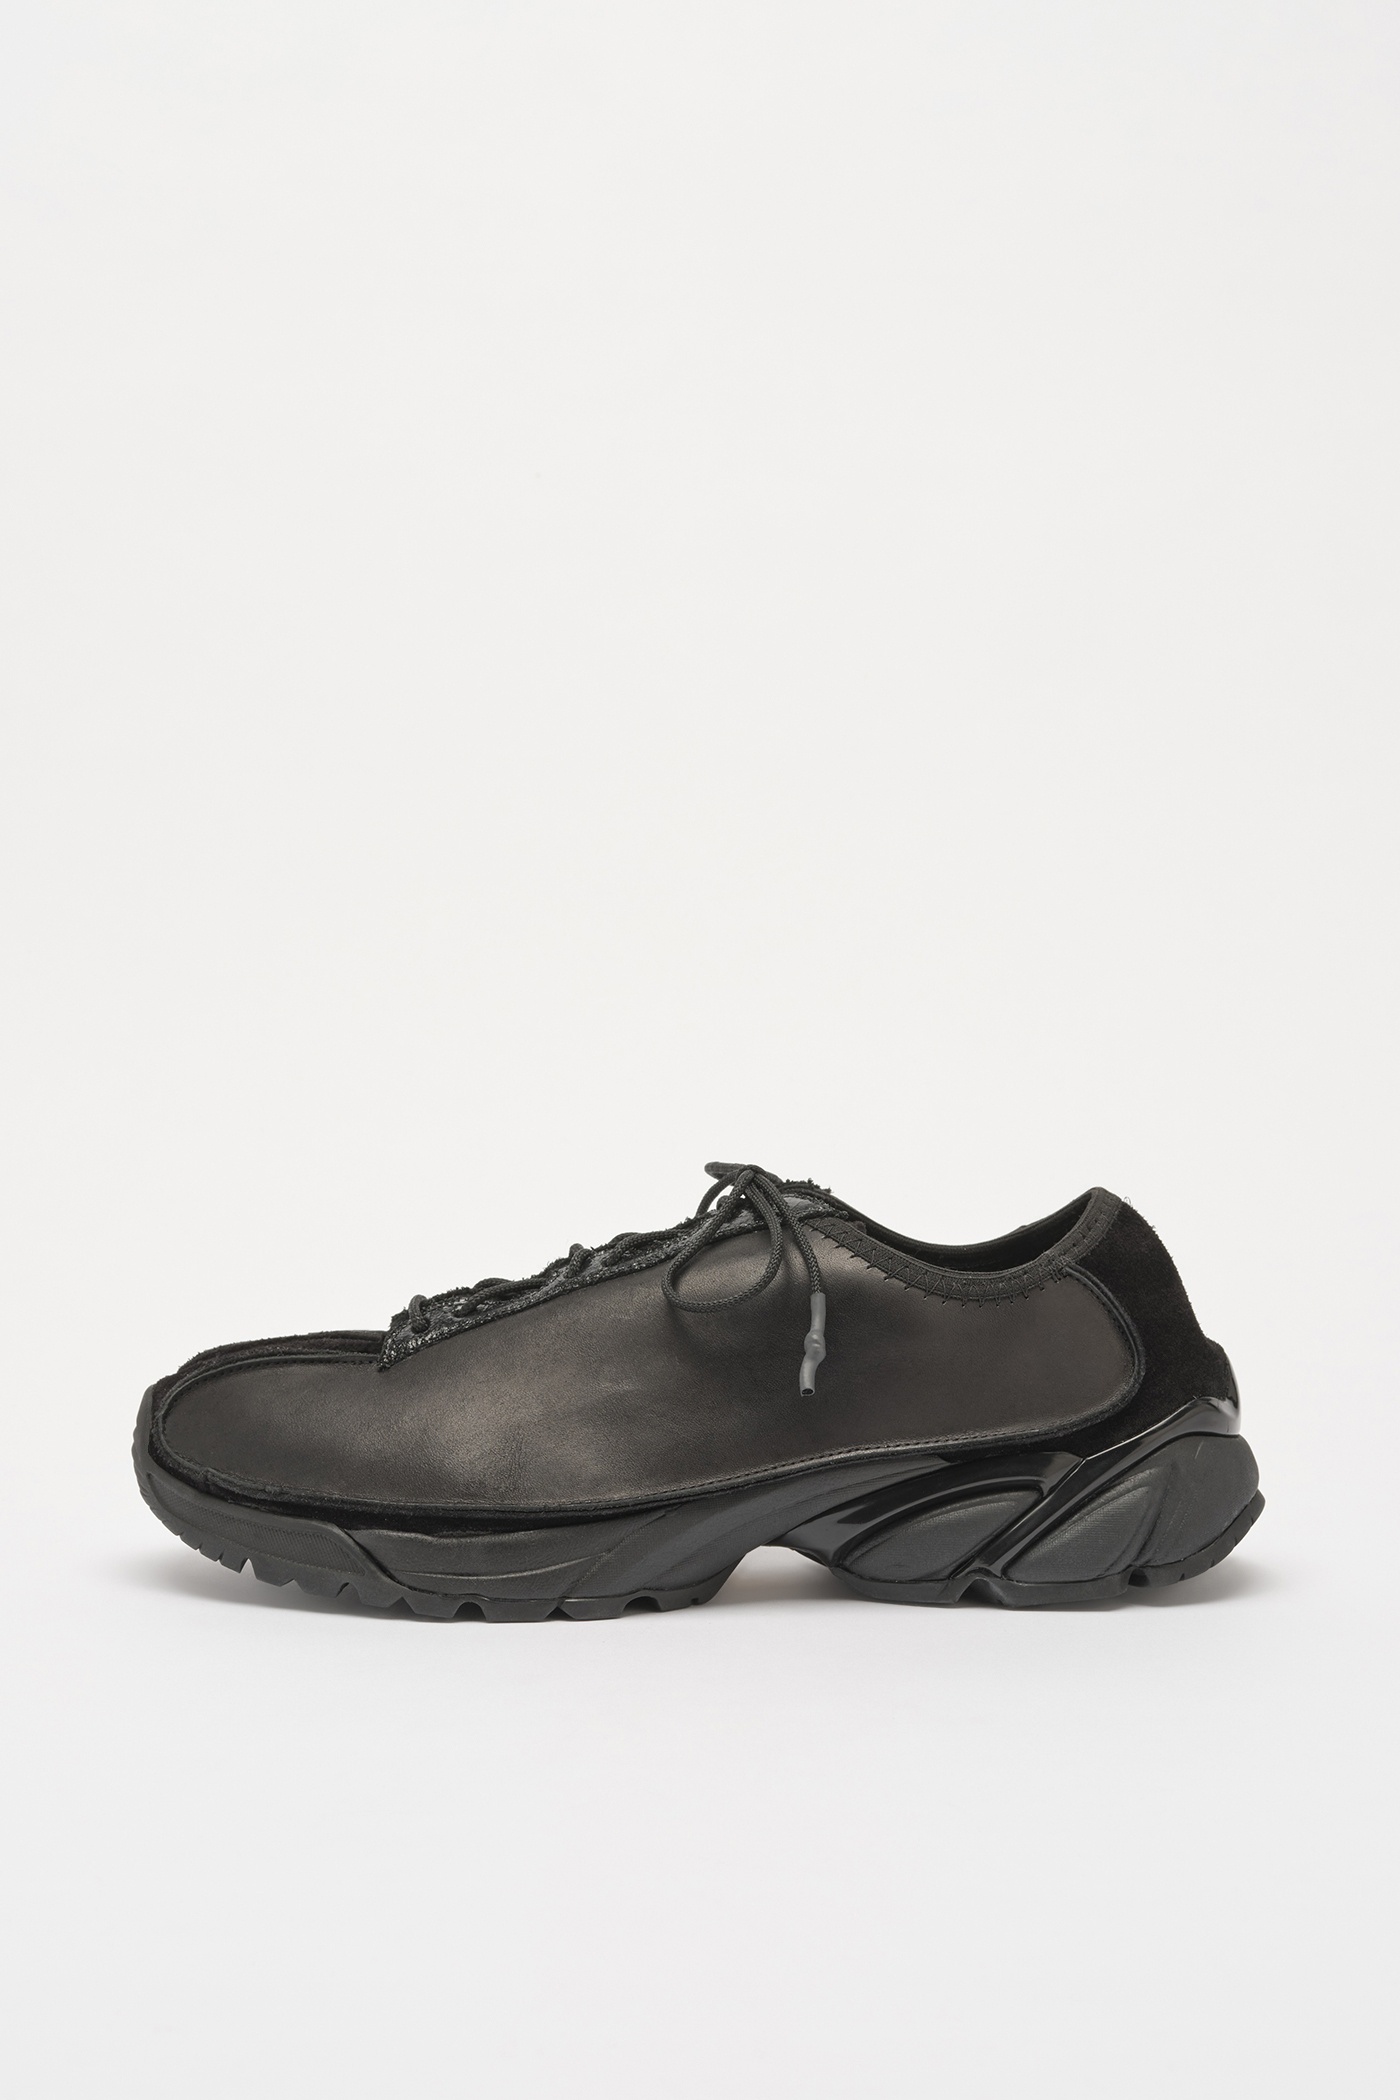 Klove Black Leather - 1